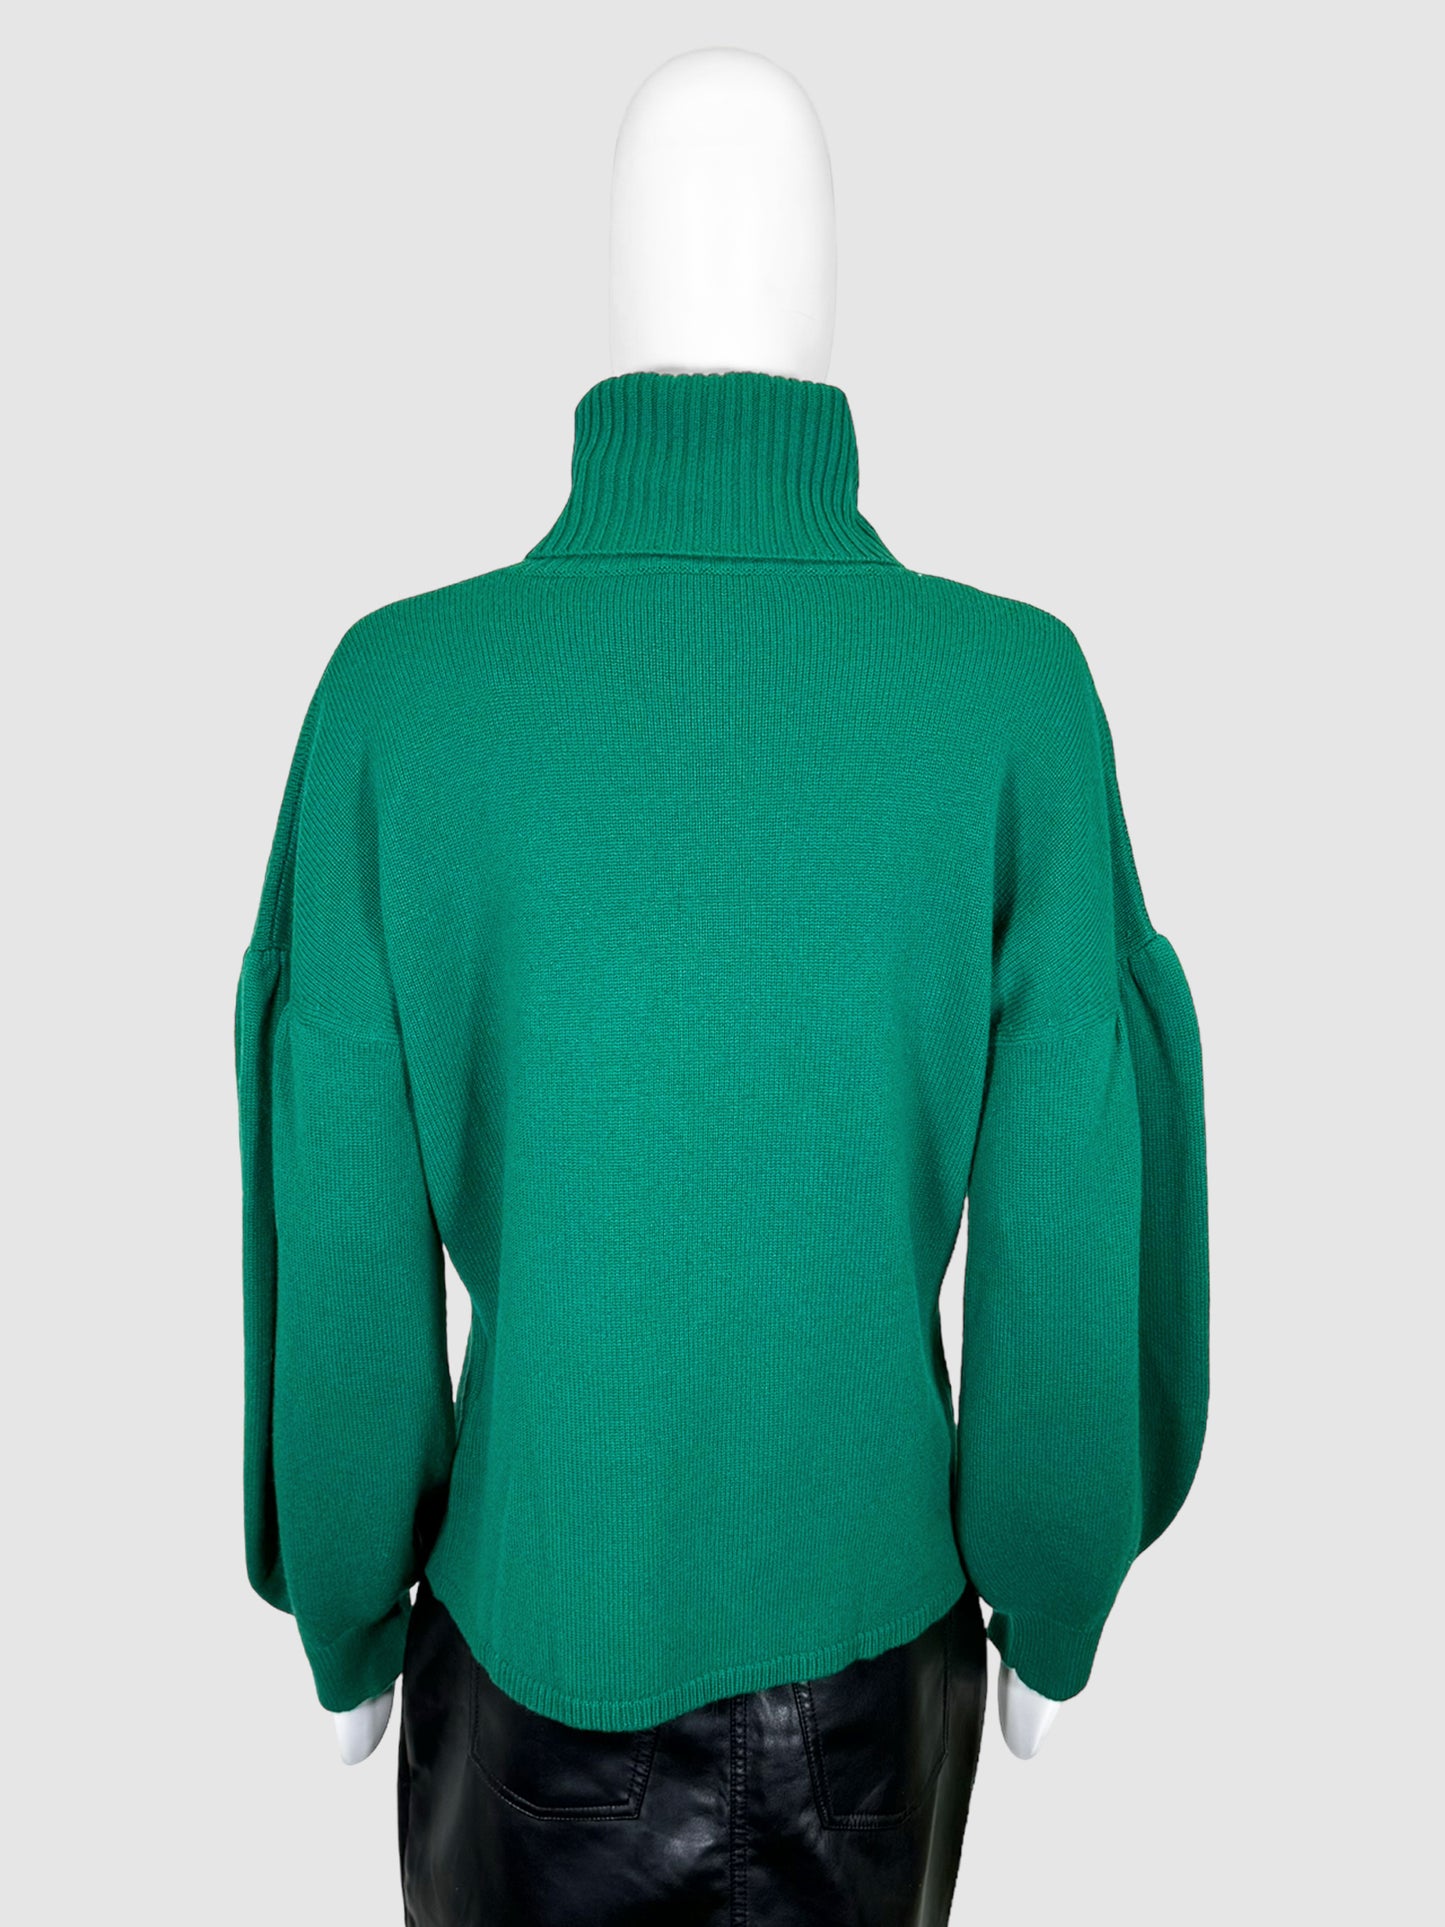 Turtleneck Bell Sleeve Sweater - Size XL